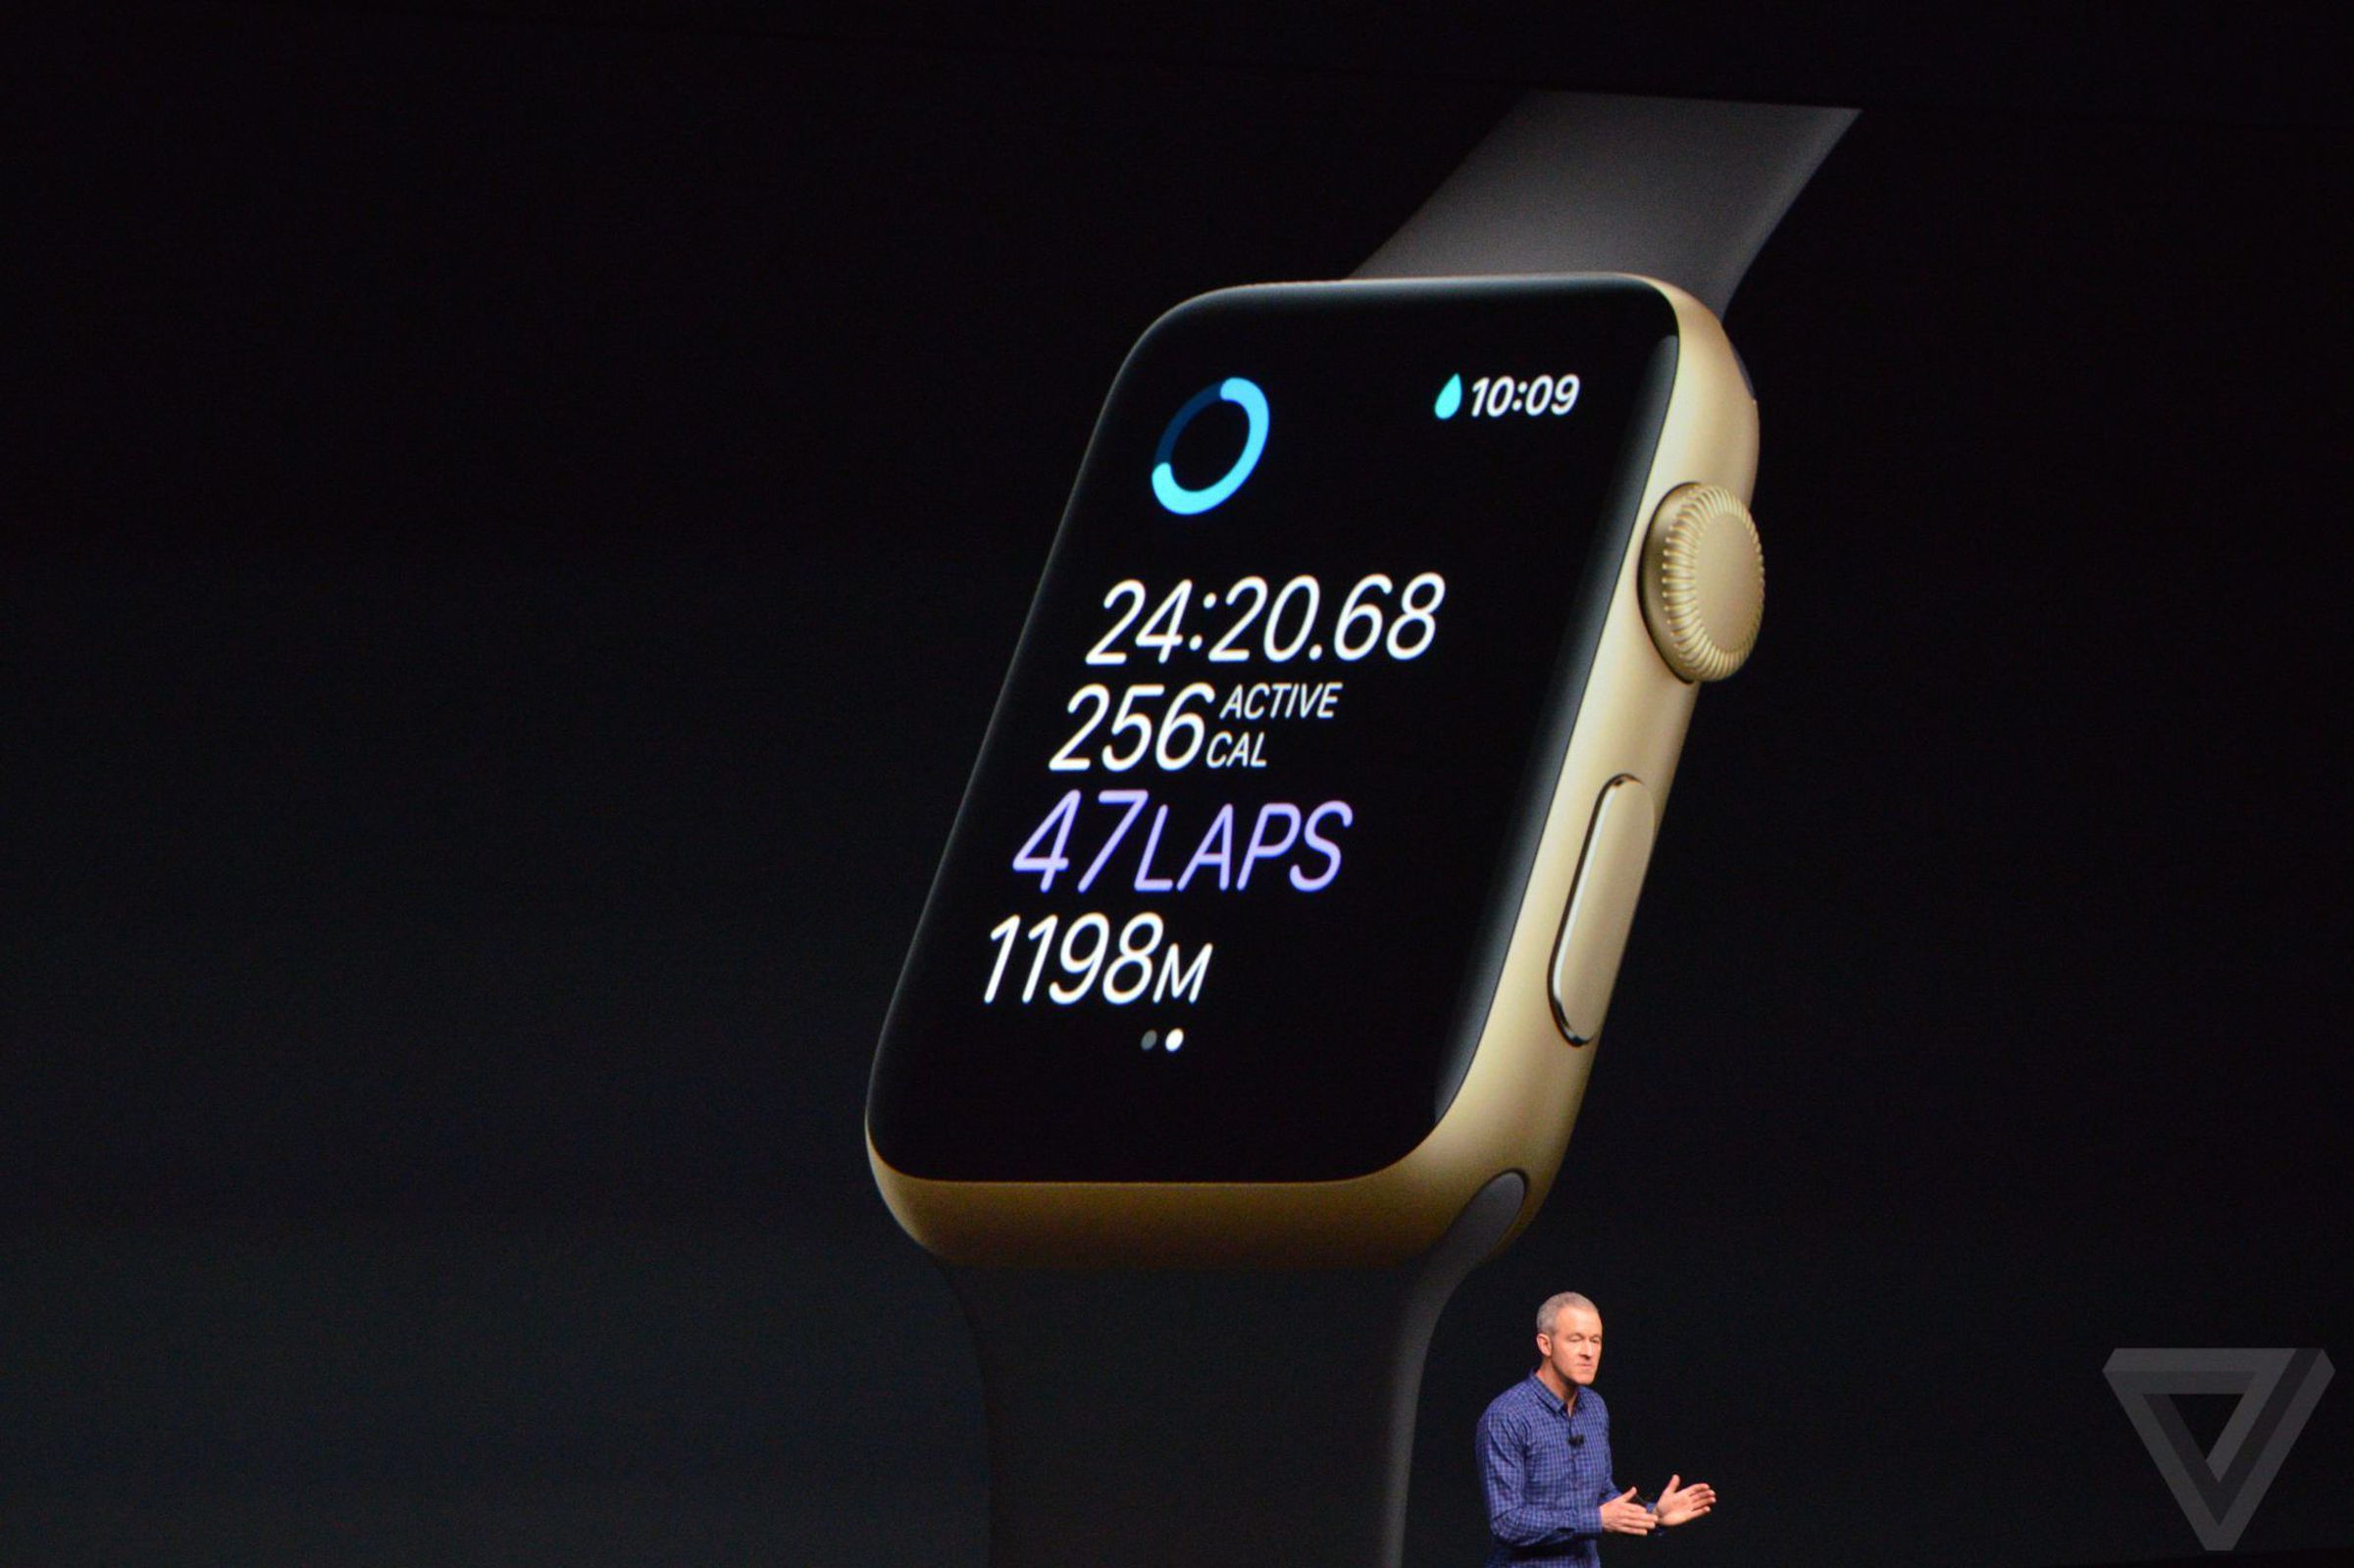 Apple Watch Series 2 announcement photos